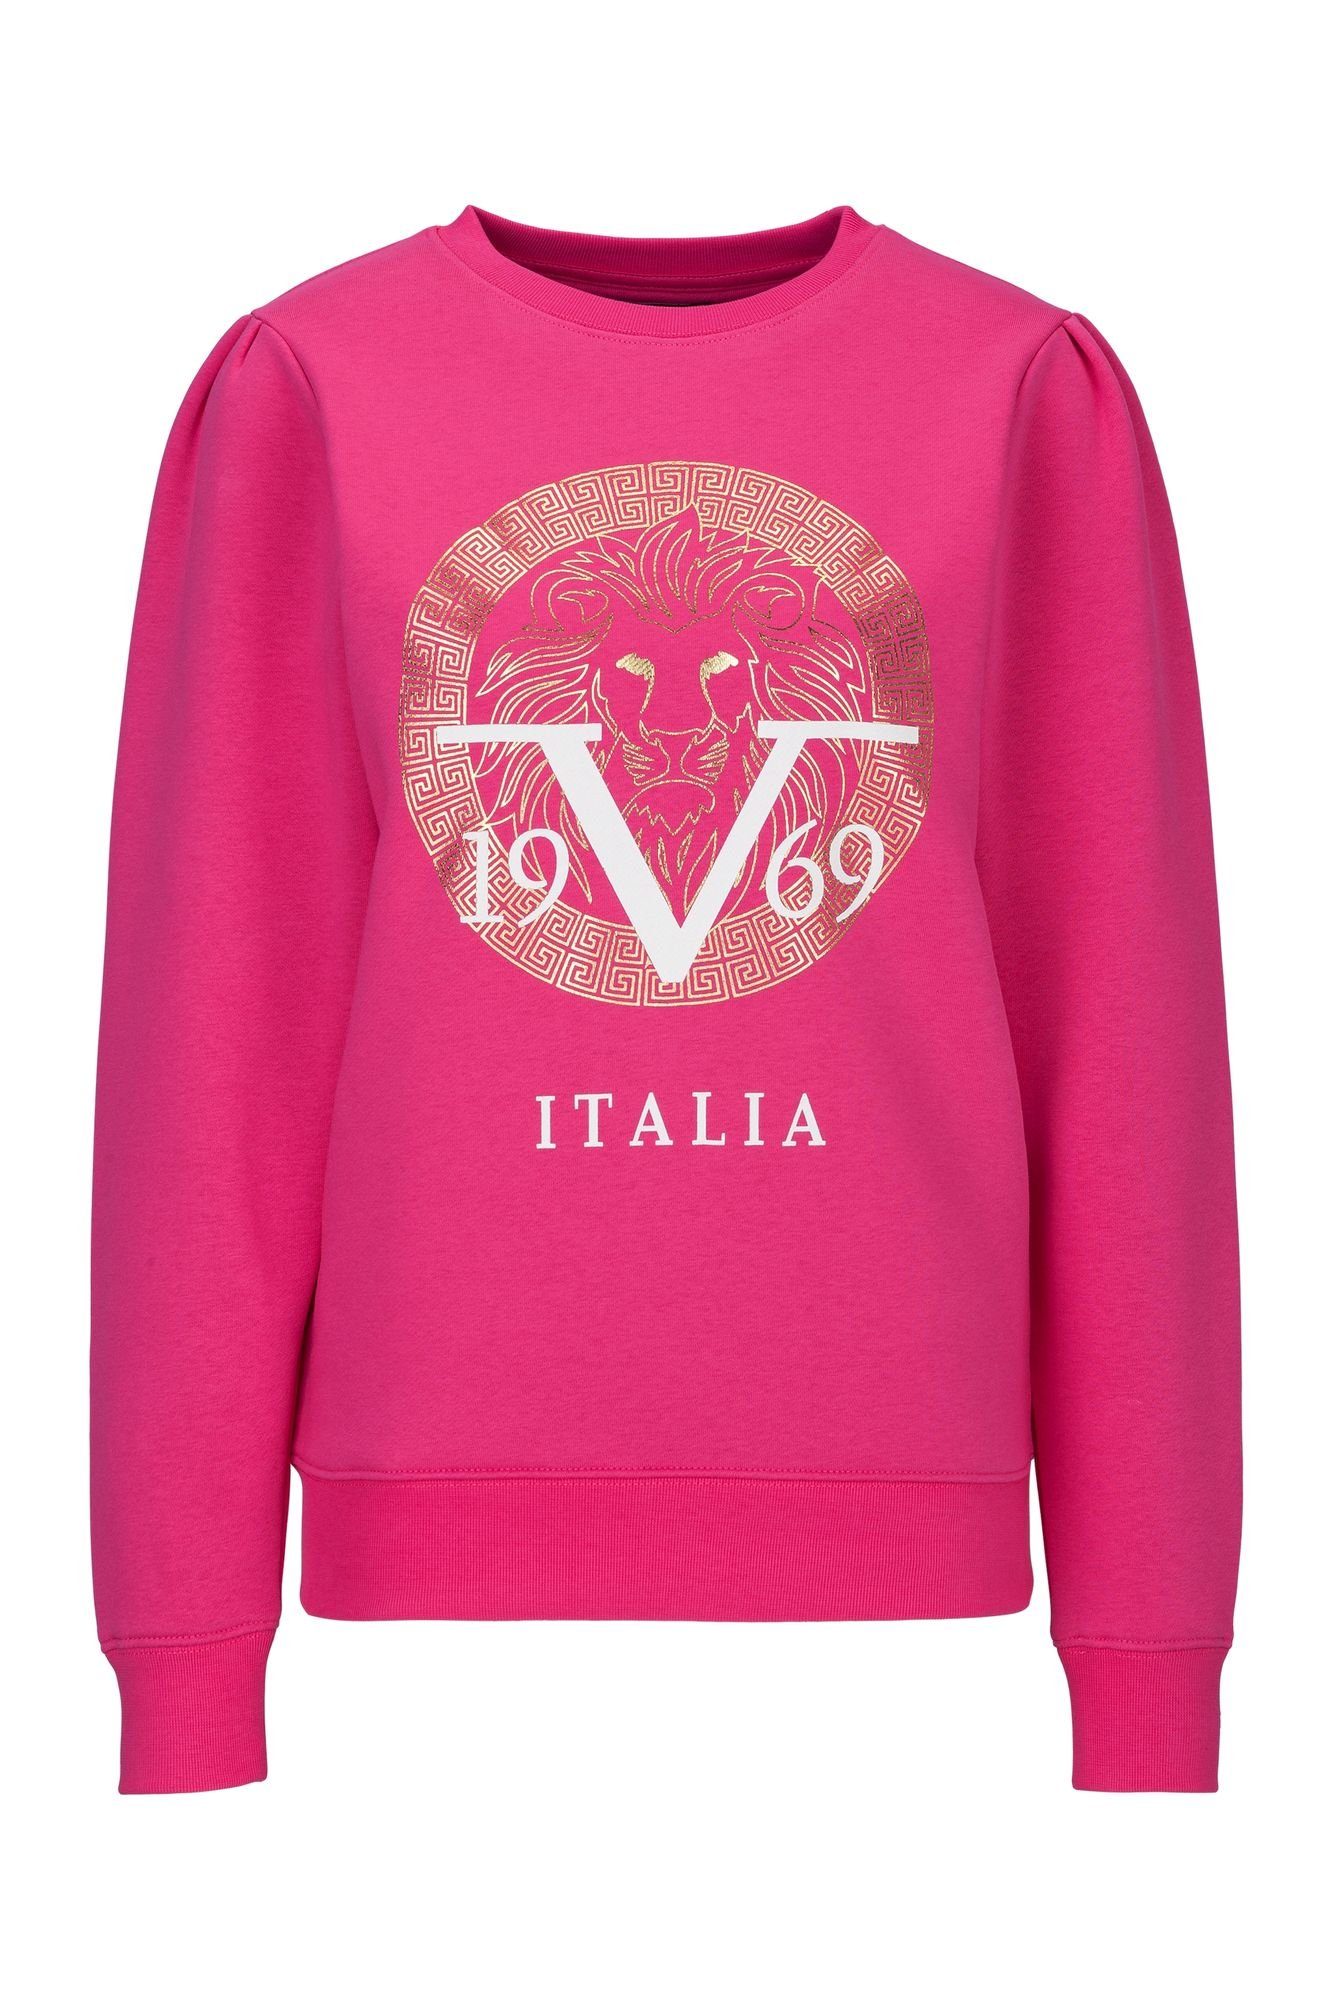 19V69 Italia by Erika Versace Sweatshirt